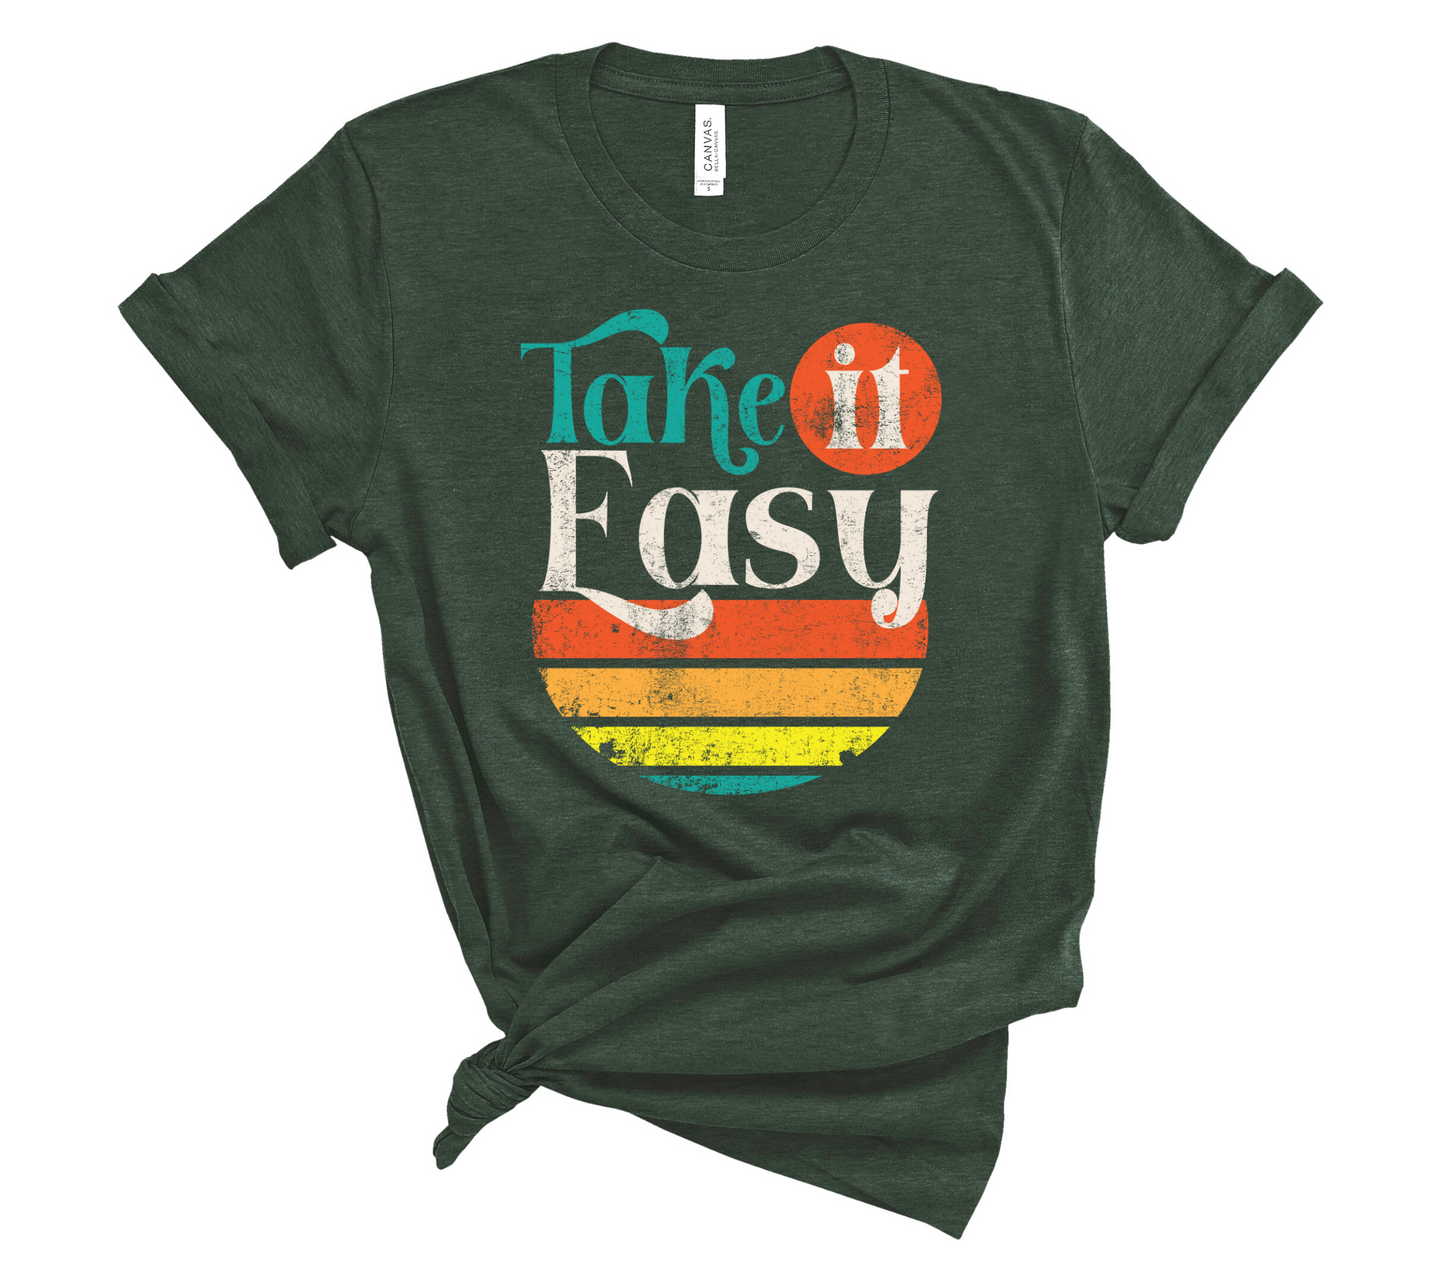 Eagles Band Shirt | Vintage Band T-Shirt | Classic Rock | Take it Easy Shirt